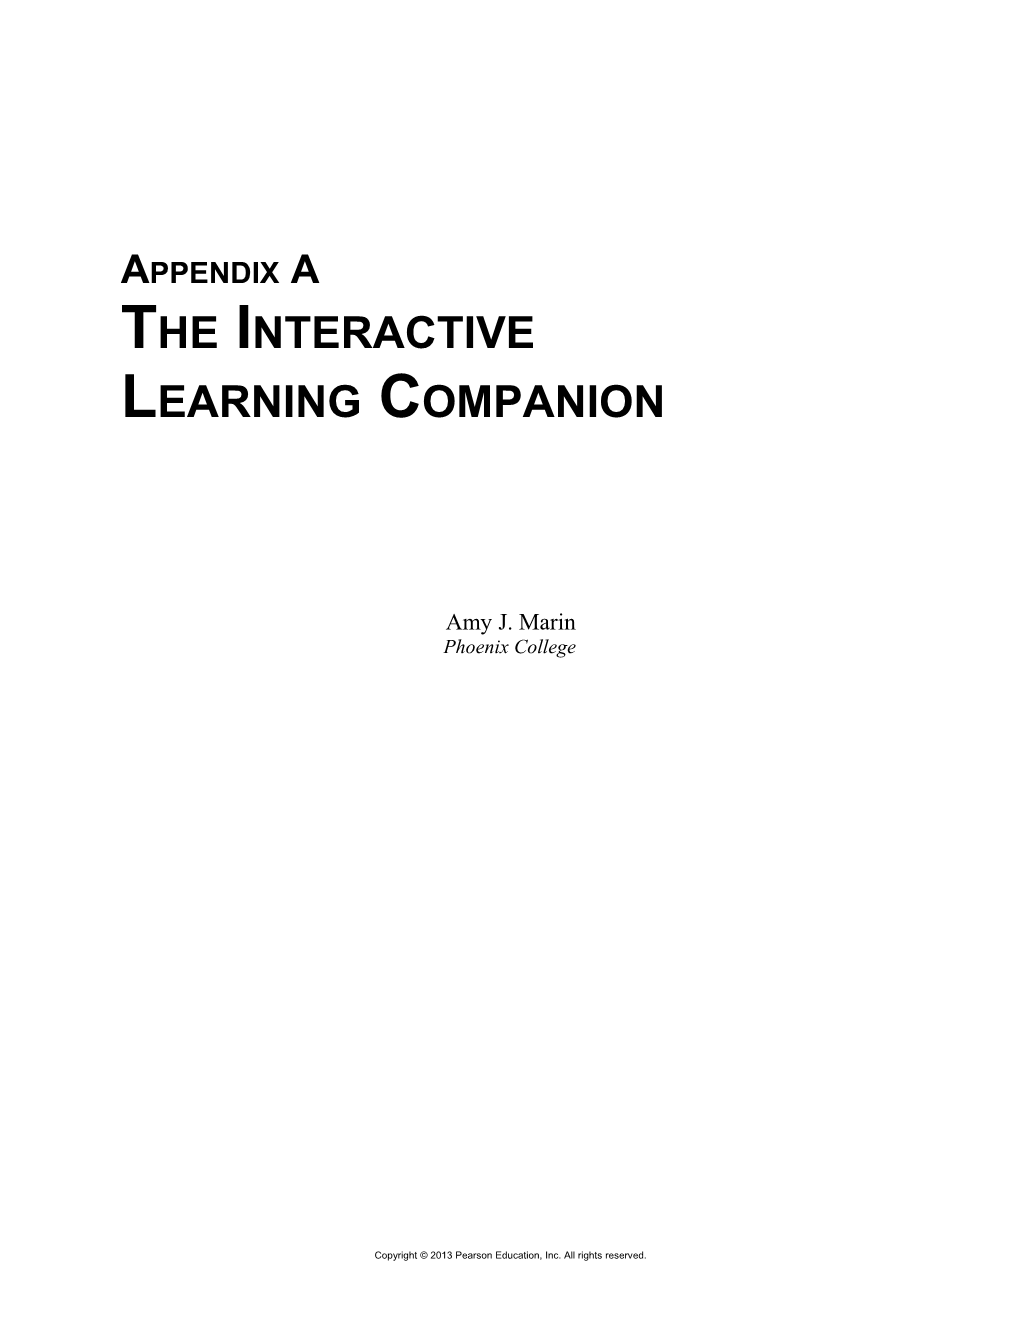 Cooperative Learning Companion